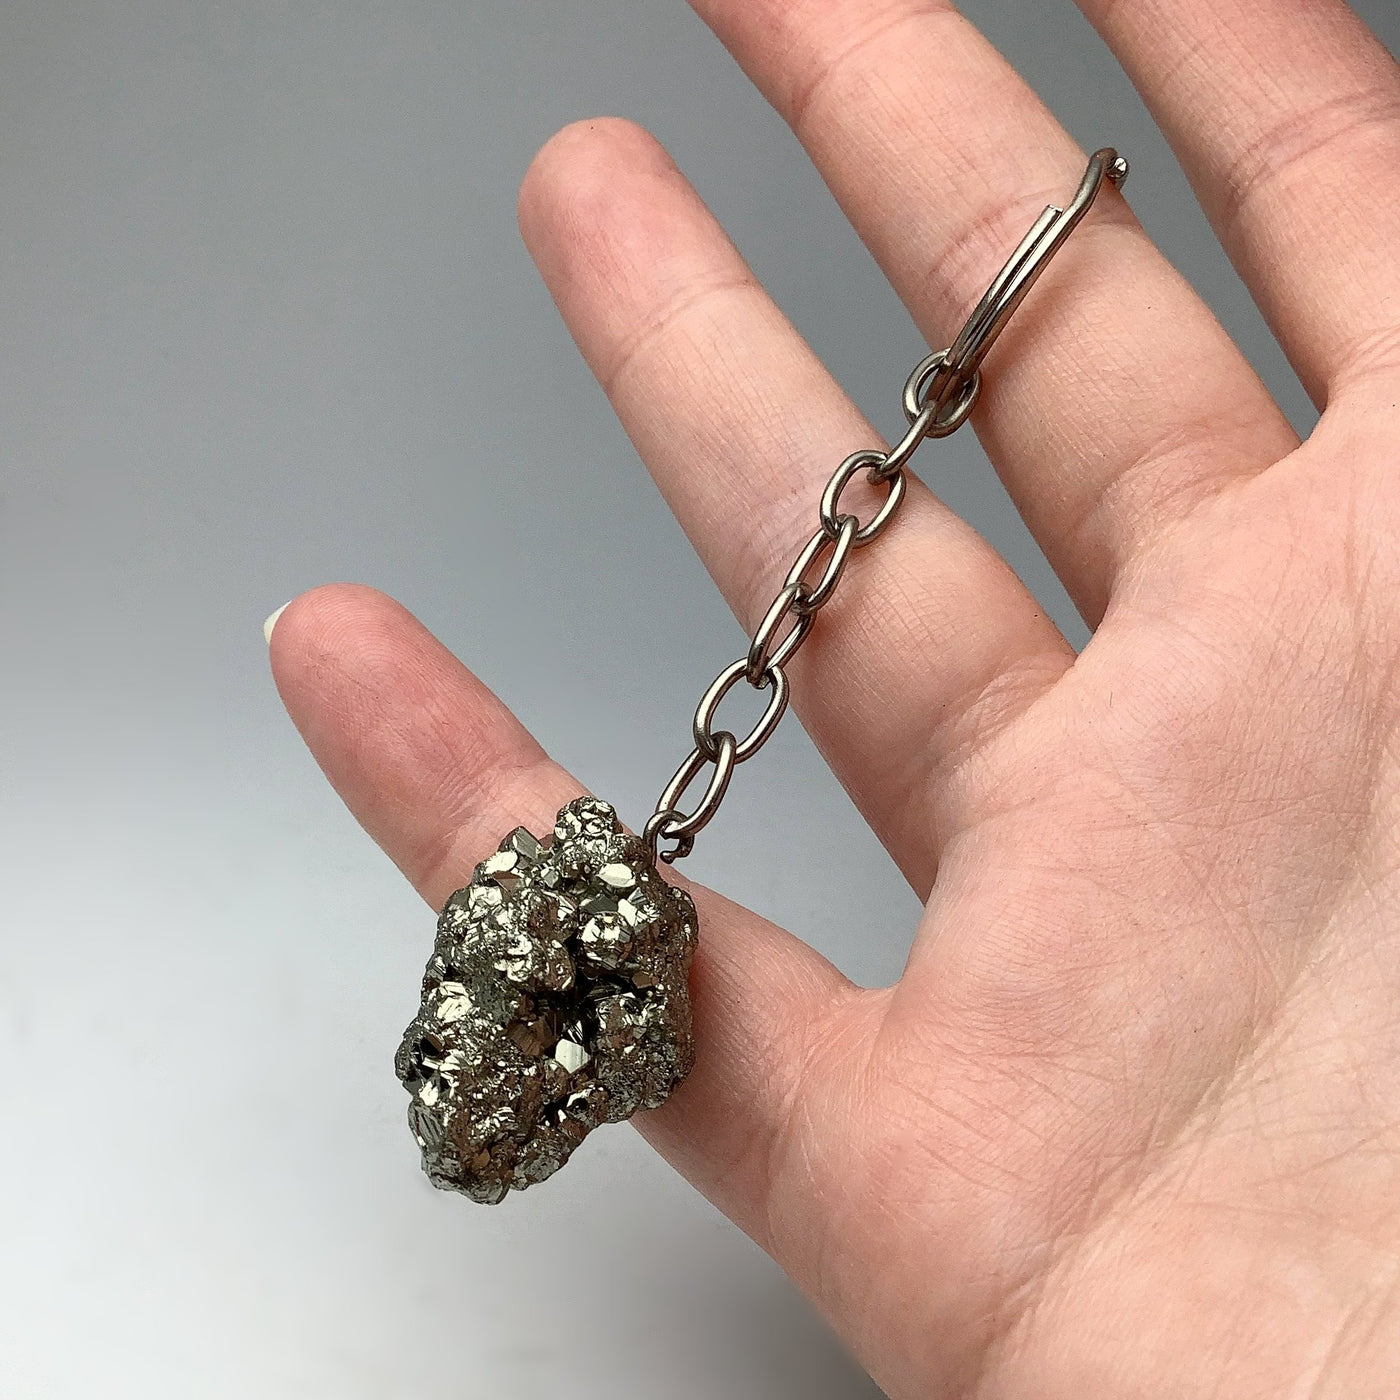 Iron Pyrite Keychain